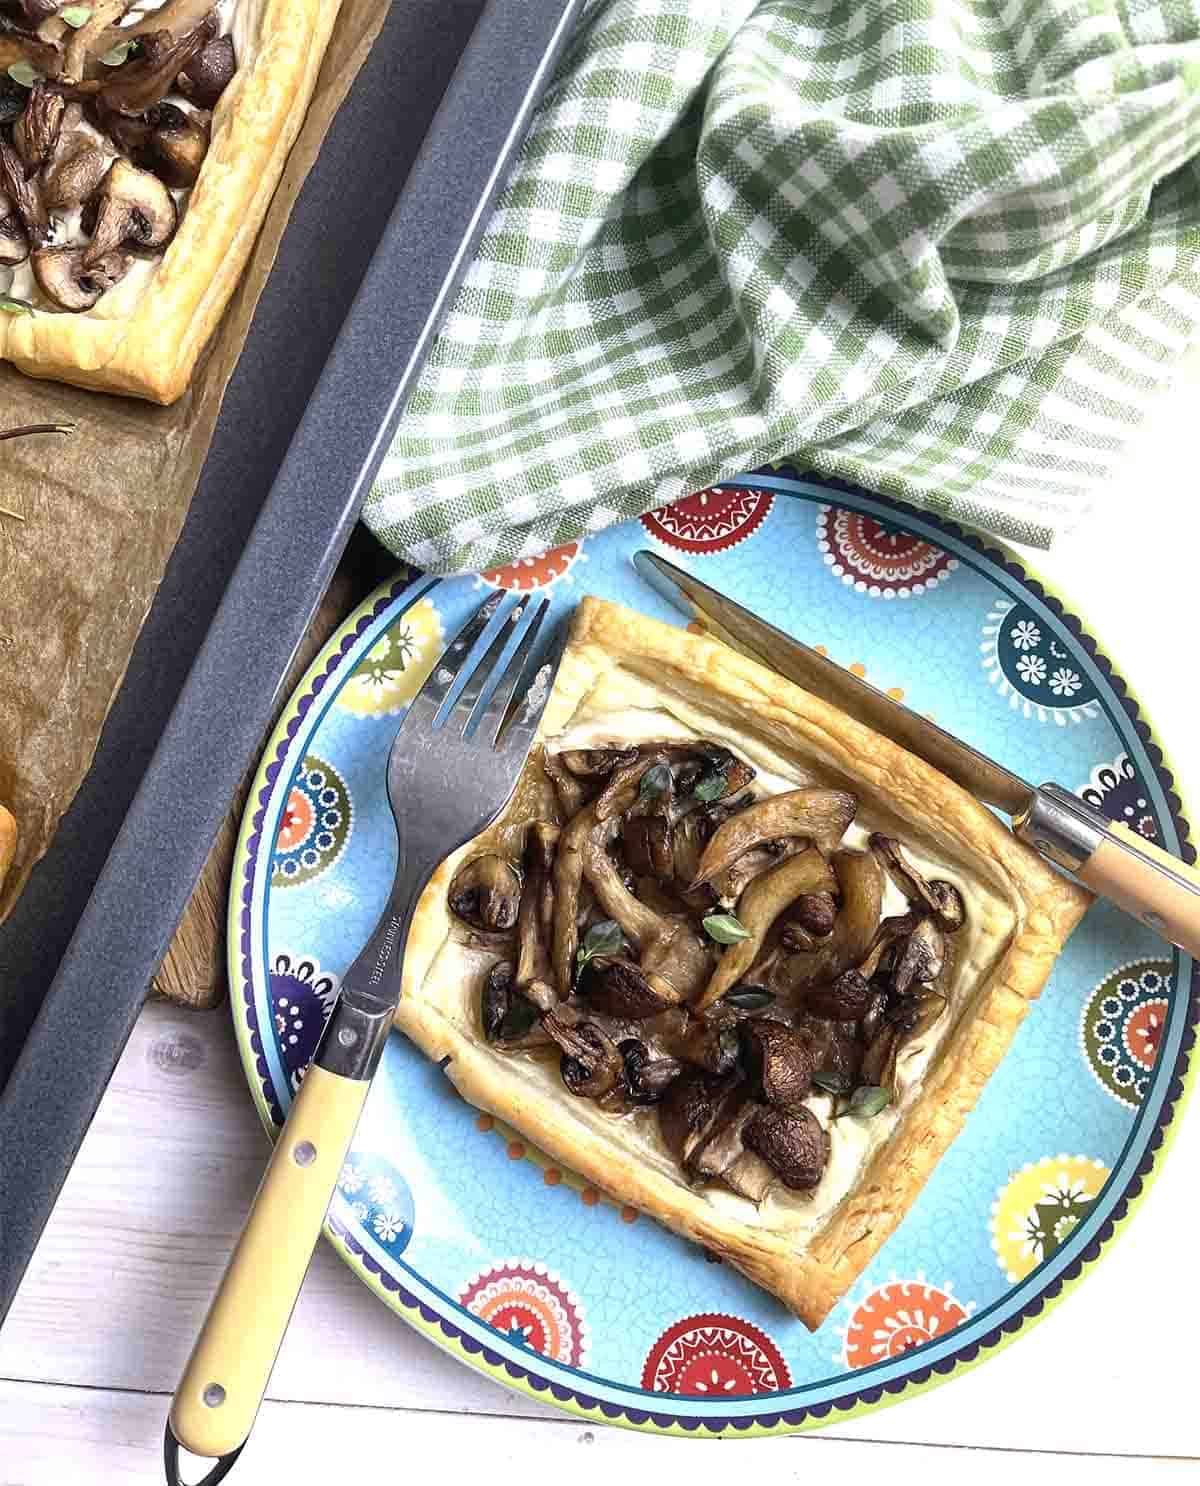 Vegetarian mushroom tart on a plate with cutlery.